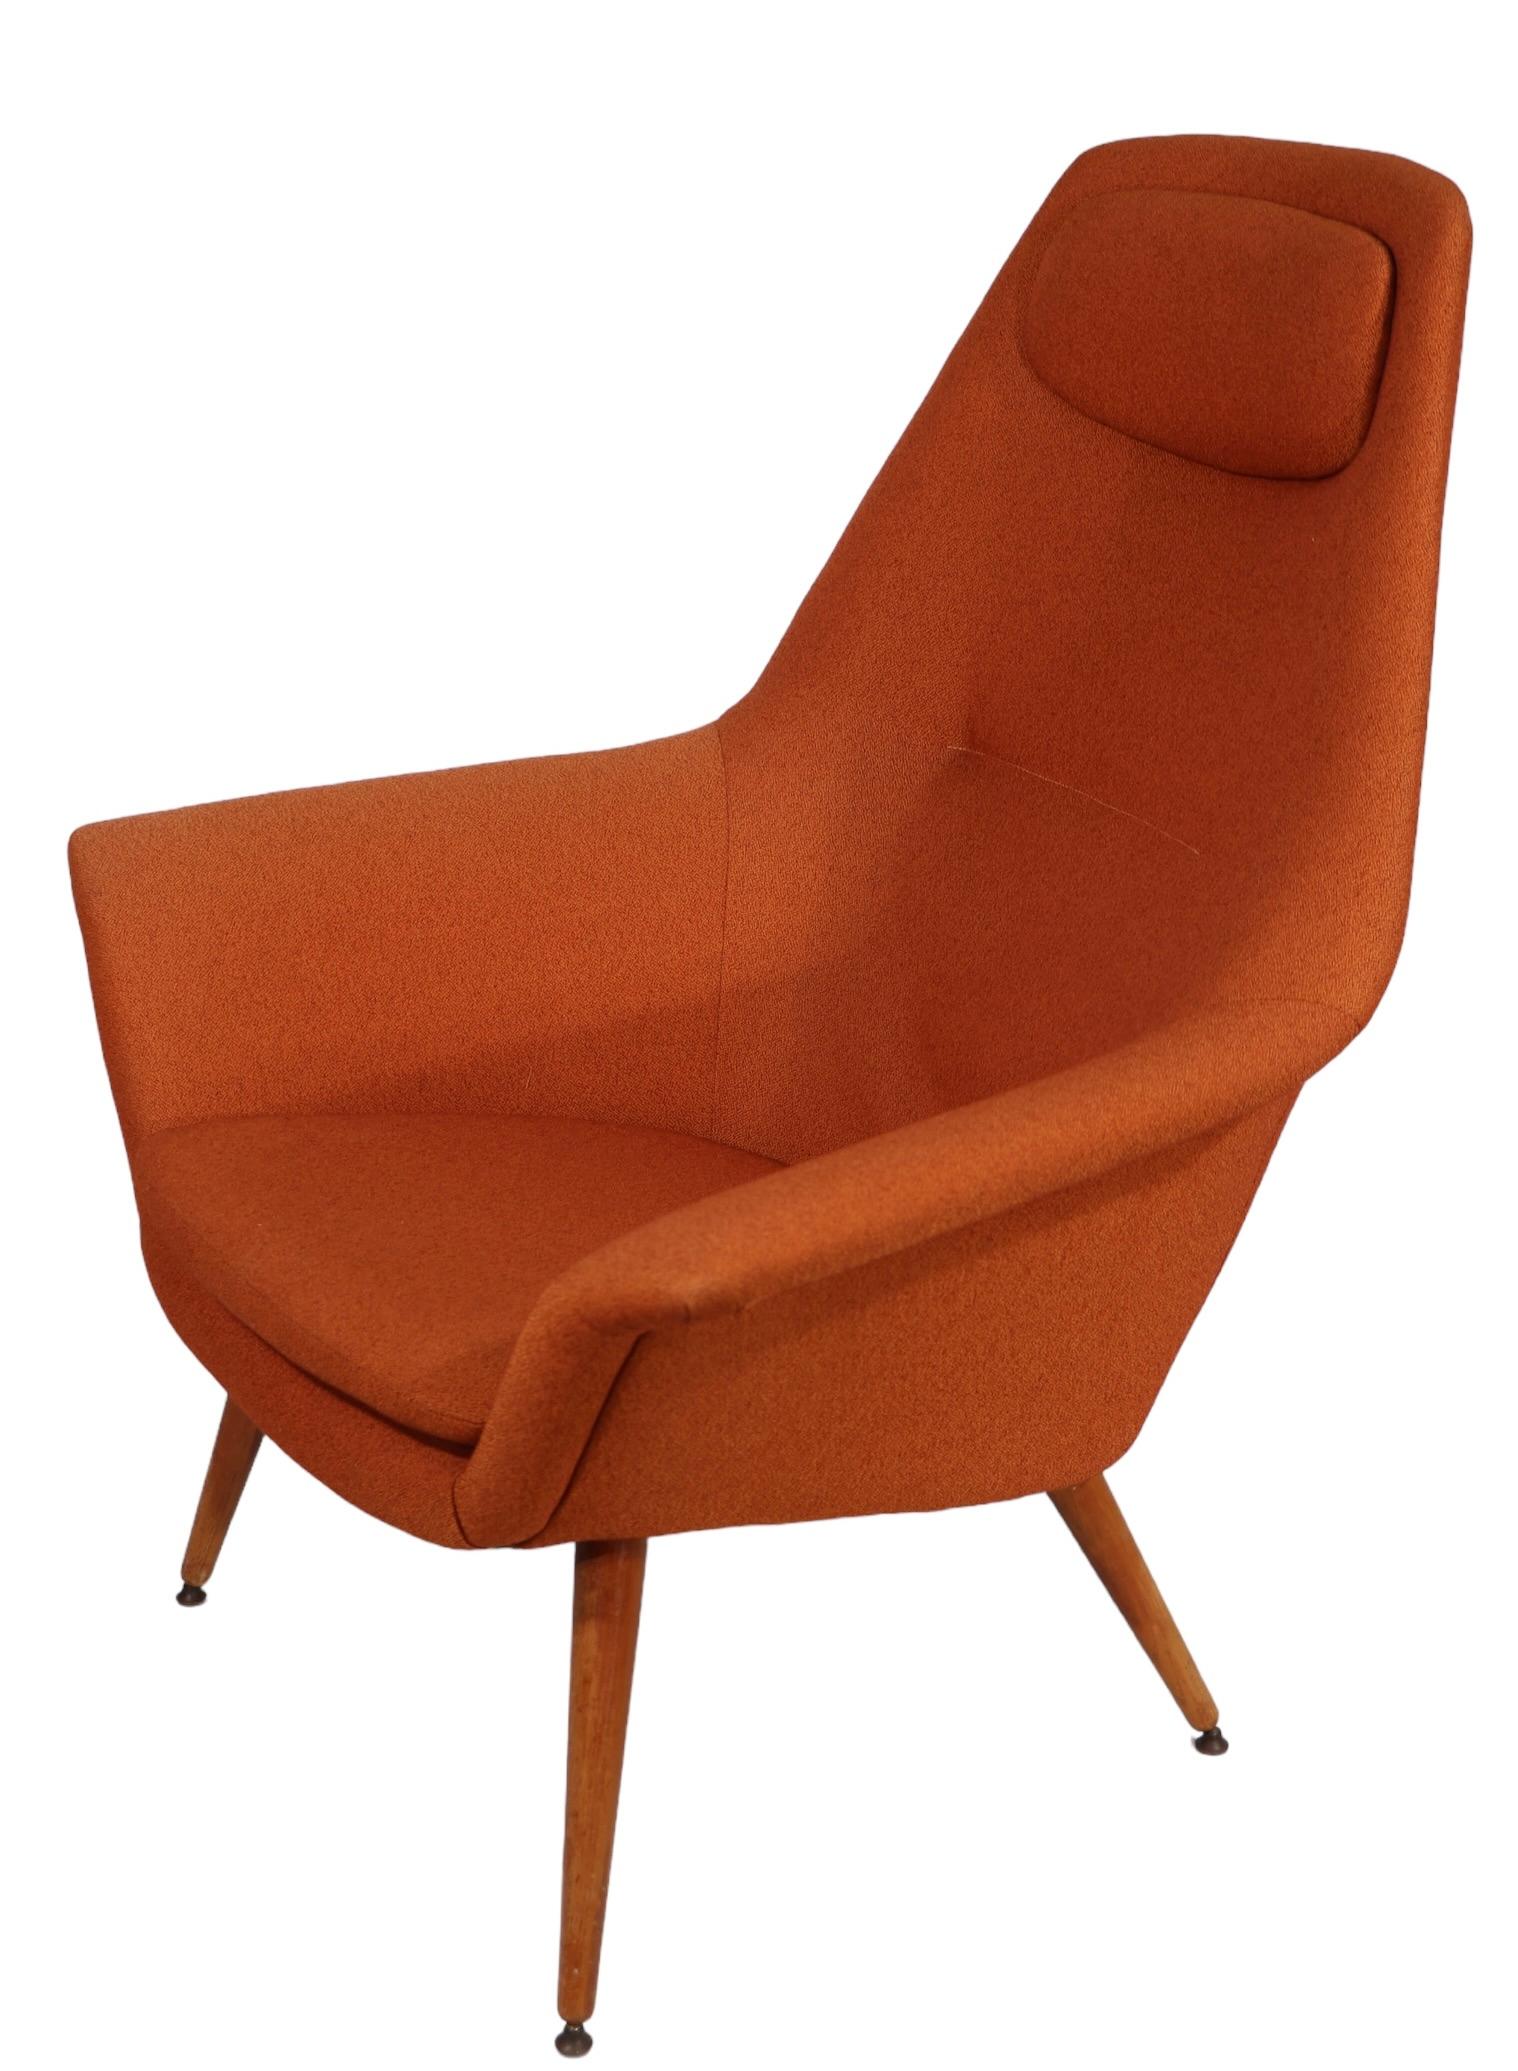  Torbjorn Afdal Bjarne Hansen Butterfly Chair Made in Norway c 1950's For Sale 11